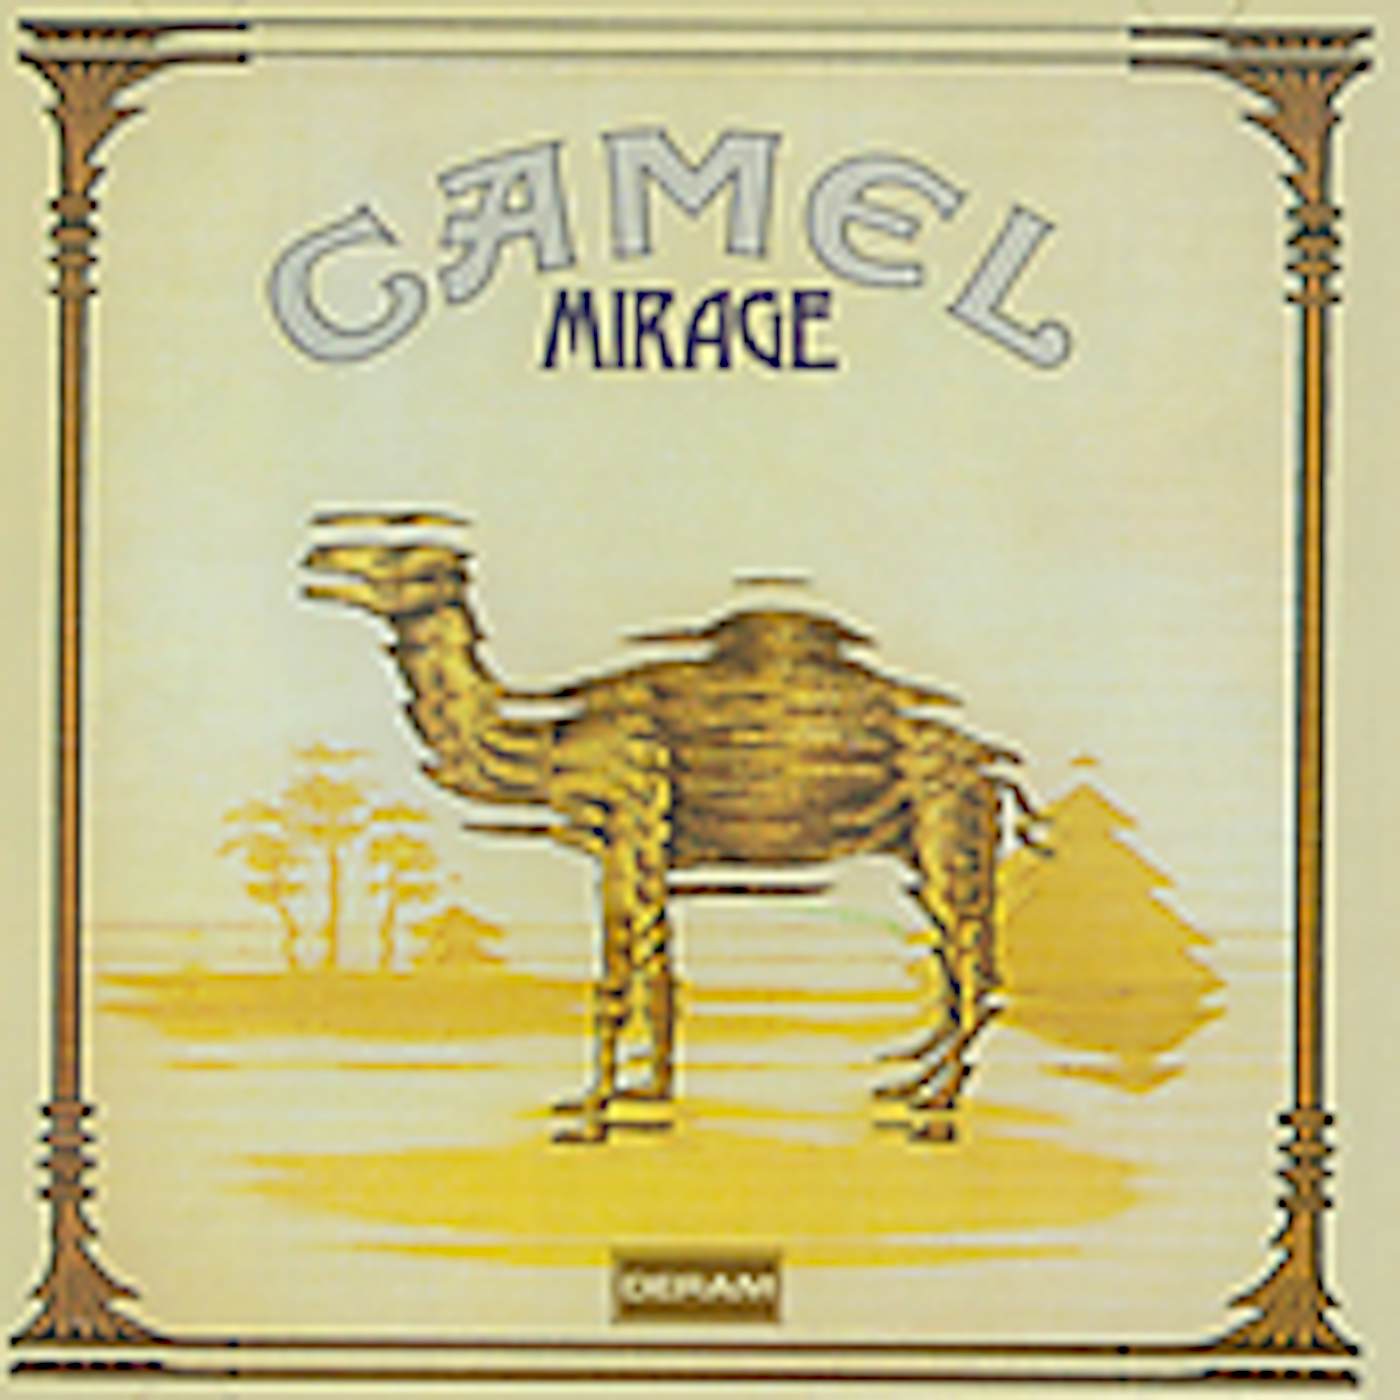 Camel MIRAGE - ENGLAND CD